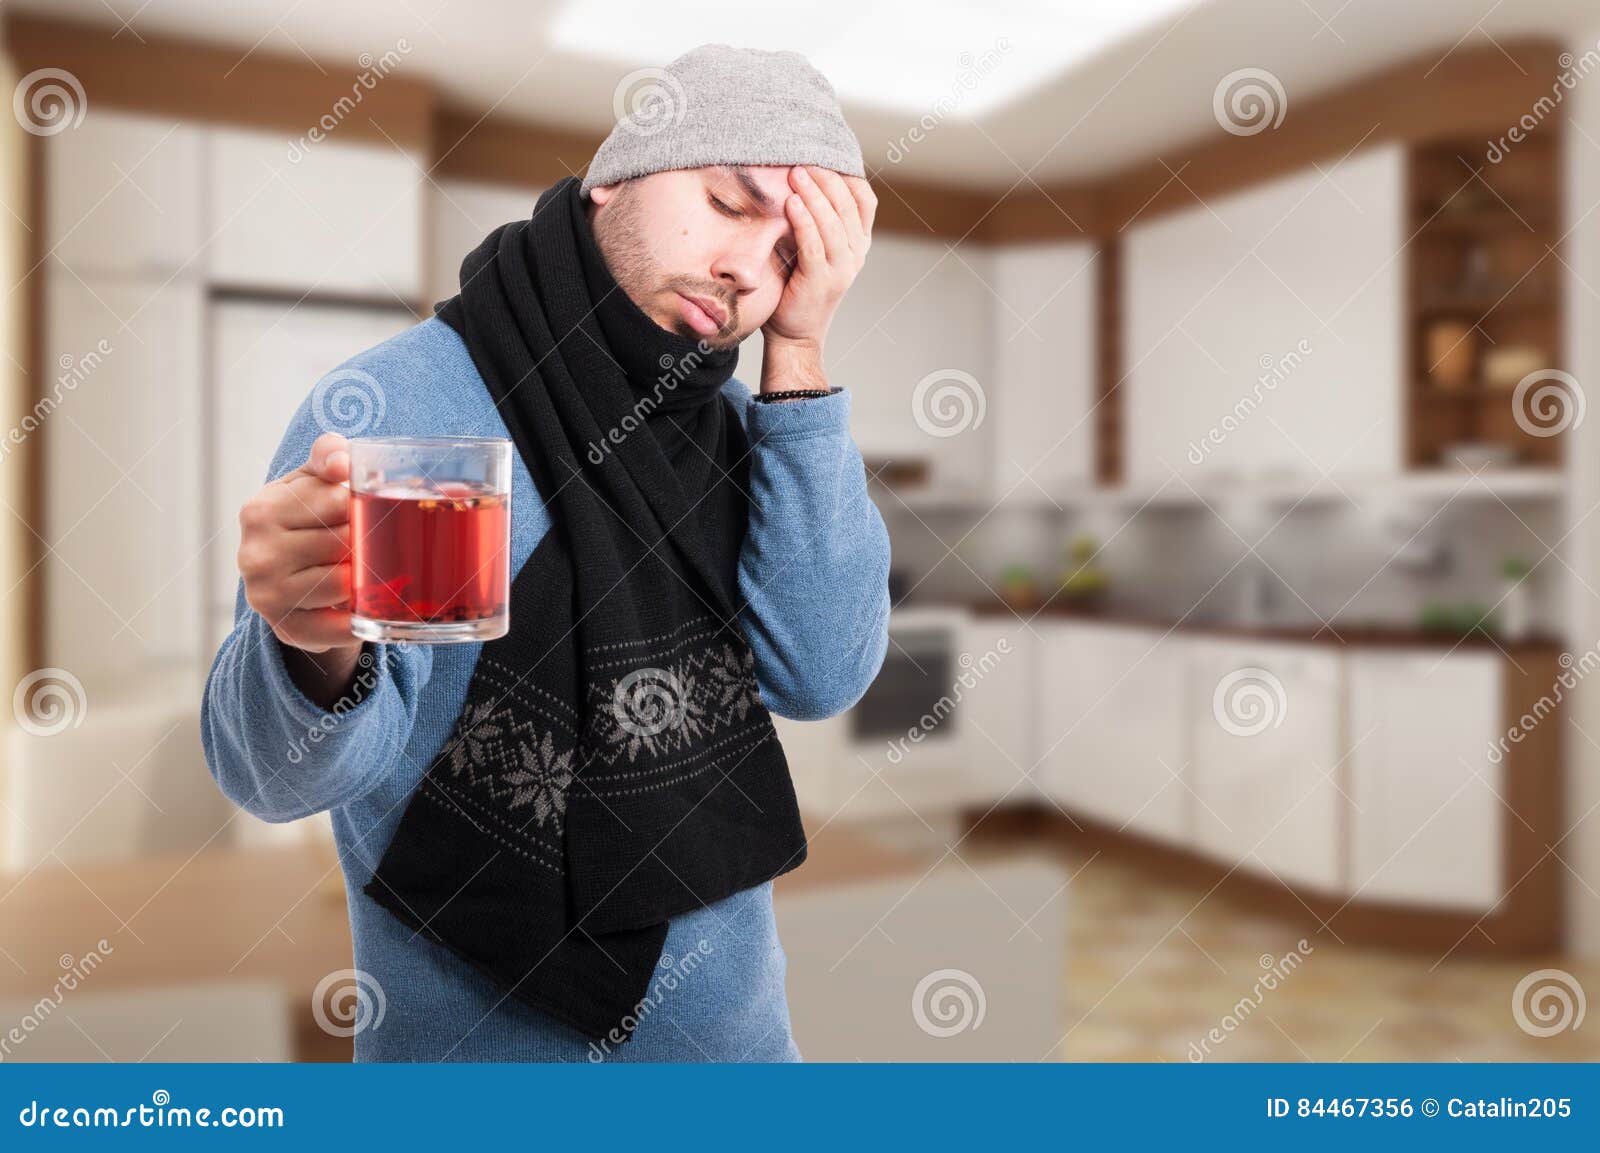 Заболел чай. Больная пьет чай. Больной человек пьет чай. Мужчина пьет чай больной. Замерзший человек пьет чай.